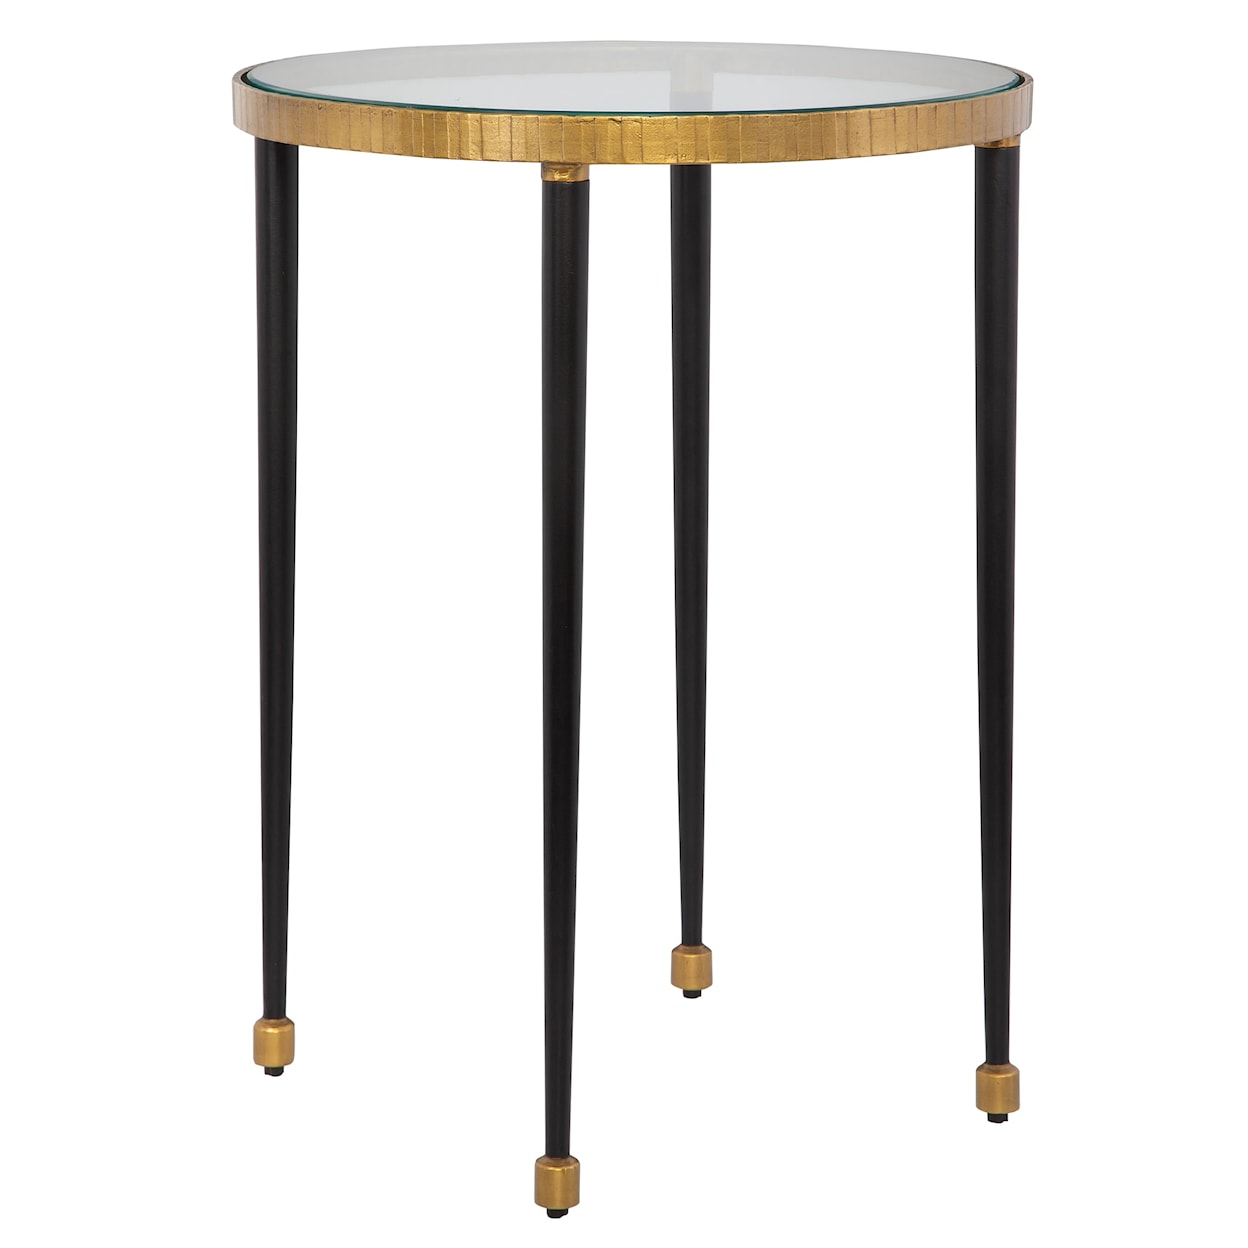 Uttermost Stiletto Stiletto Antique Gold Side Table